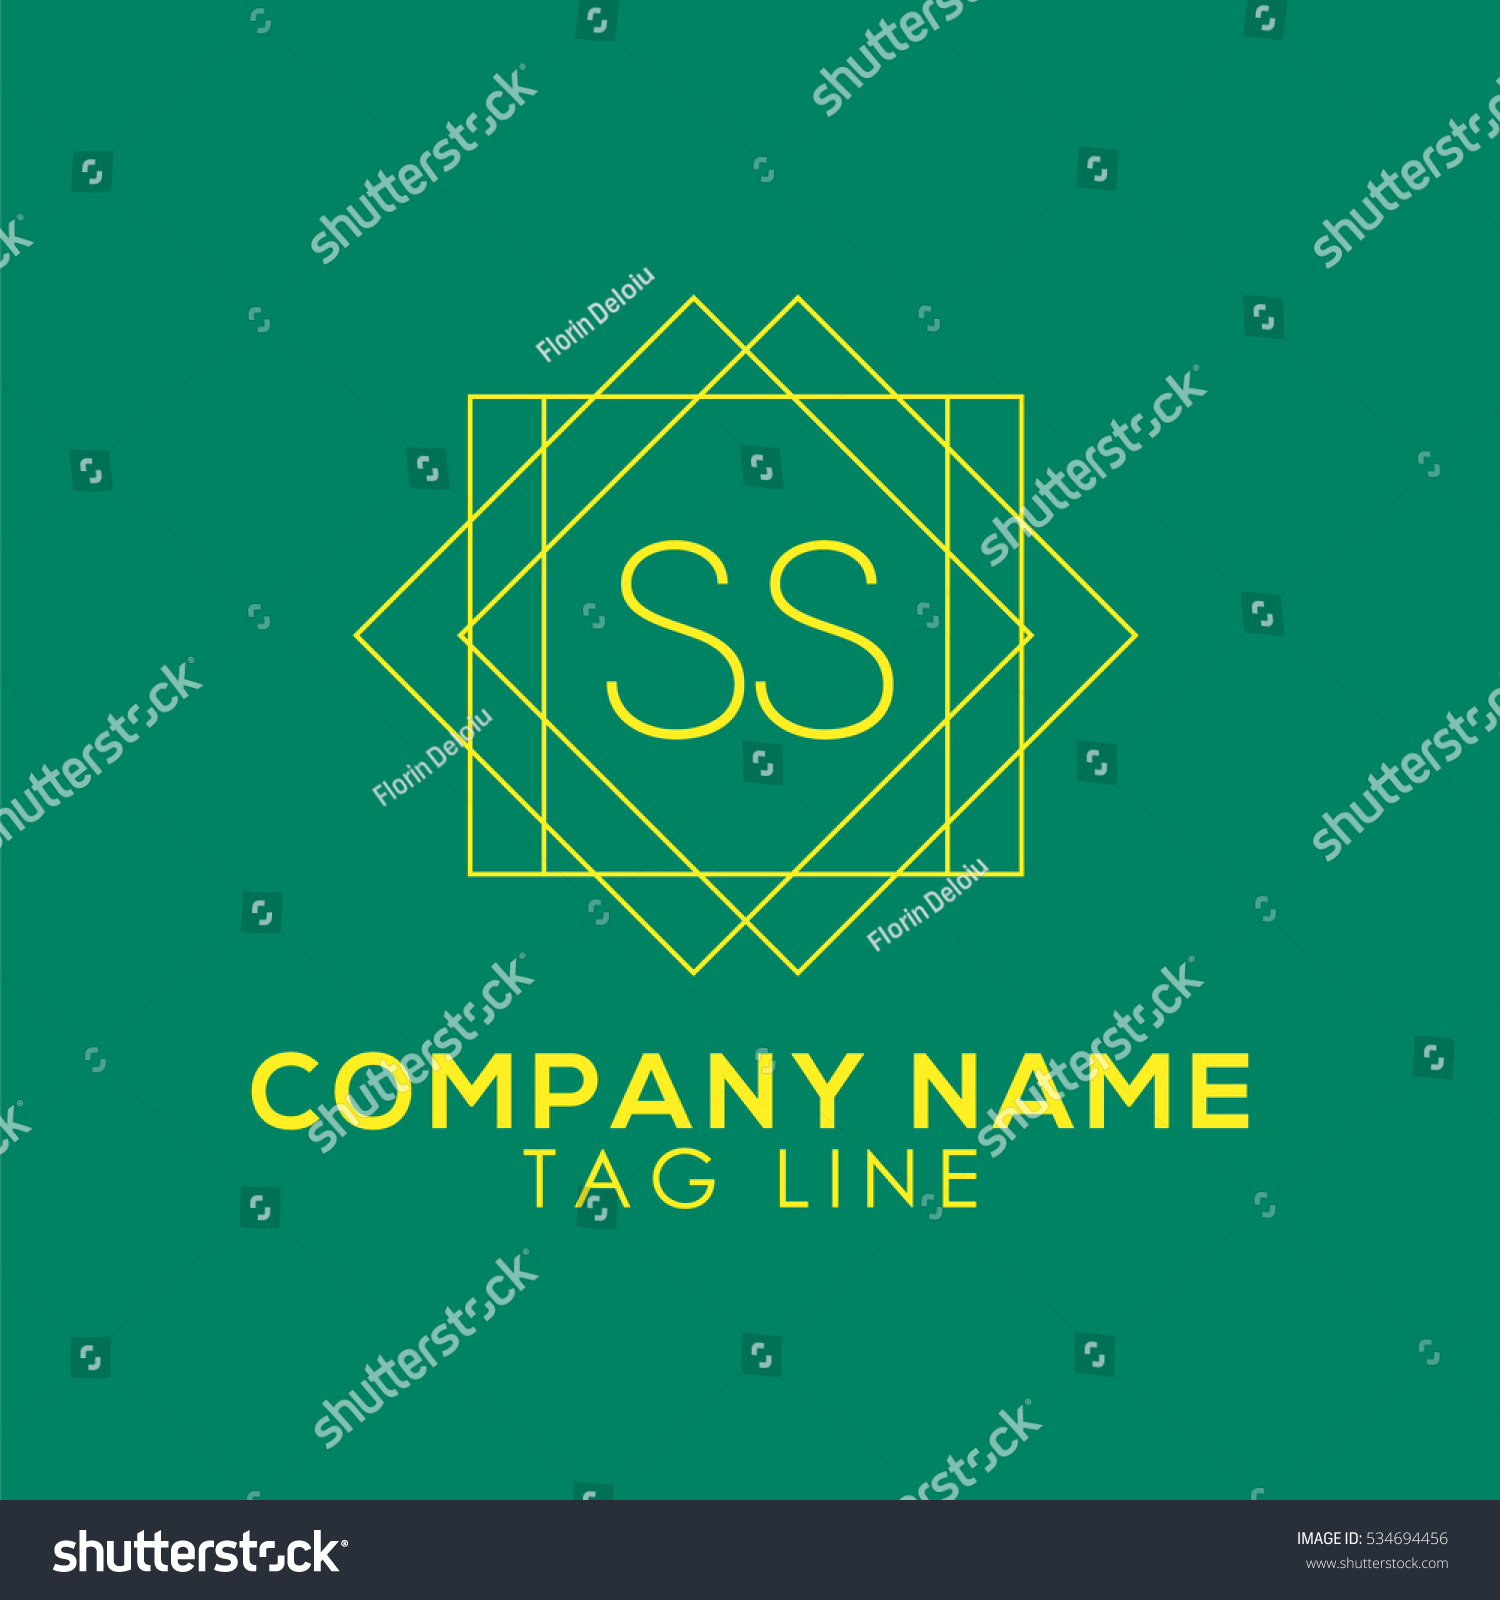 Ss Logo Stock Vector 534694456 - Shutterstock